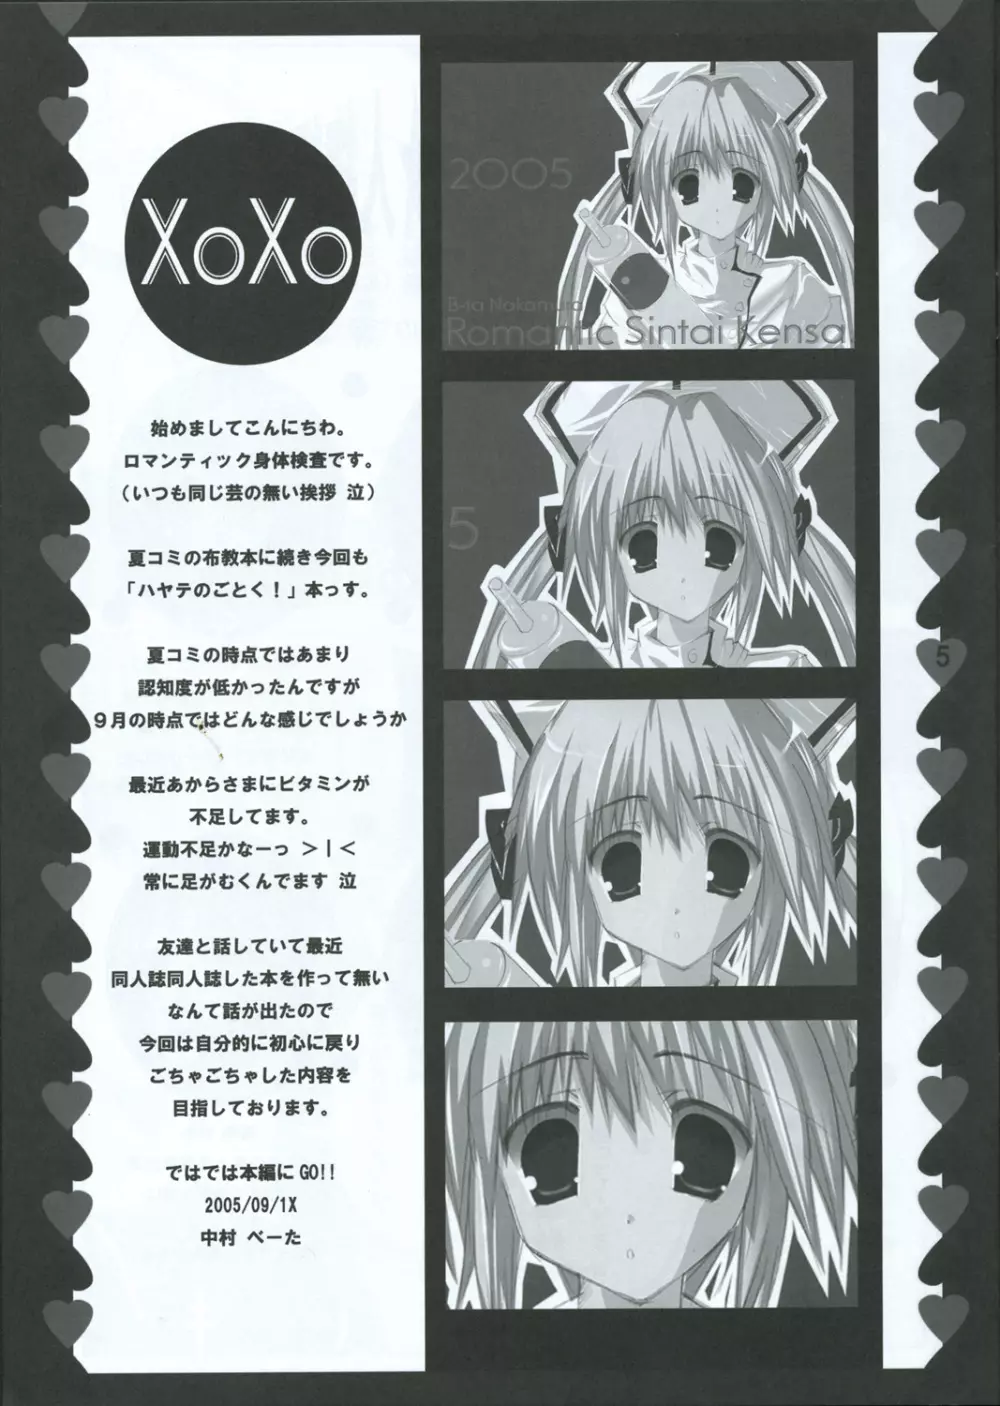 XoXo/kiss kiss - page5